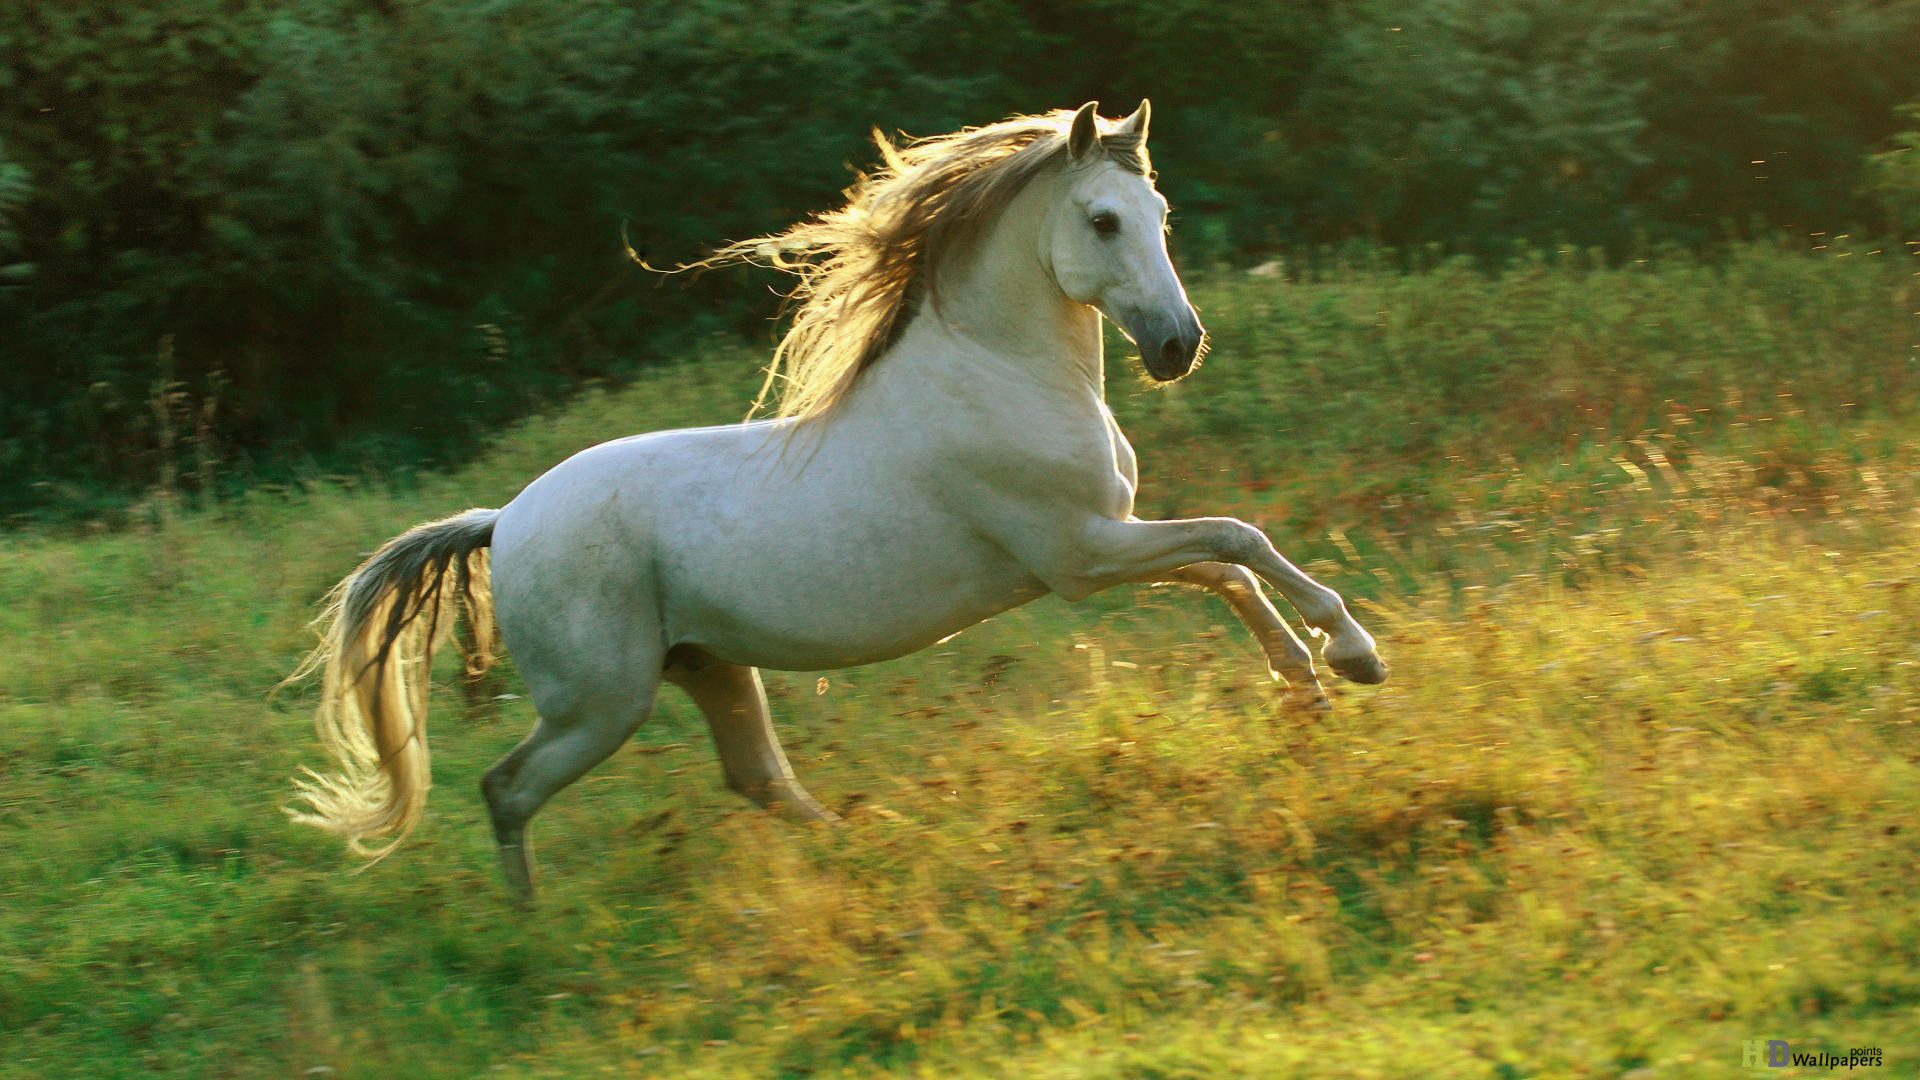 1920x1080 Running-Horse-wallpaper-hd-1080p.jpg 1,920Ã1,080 pixels